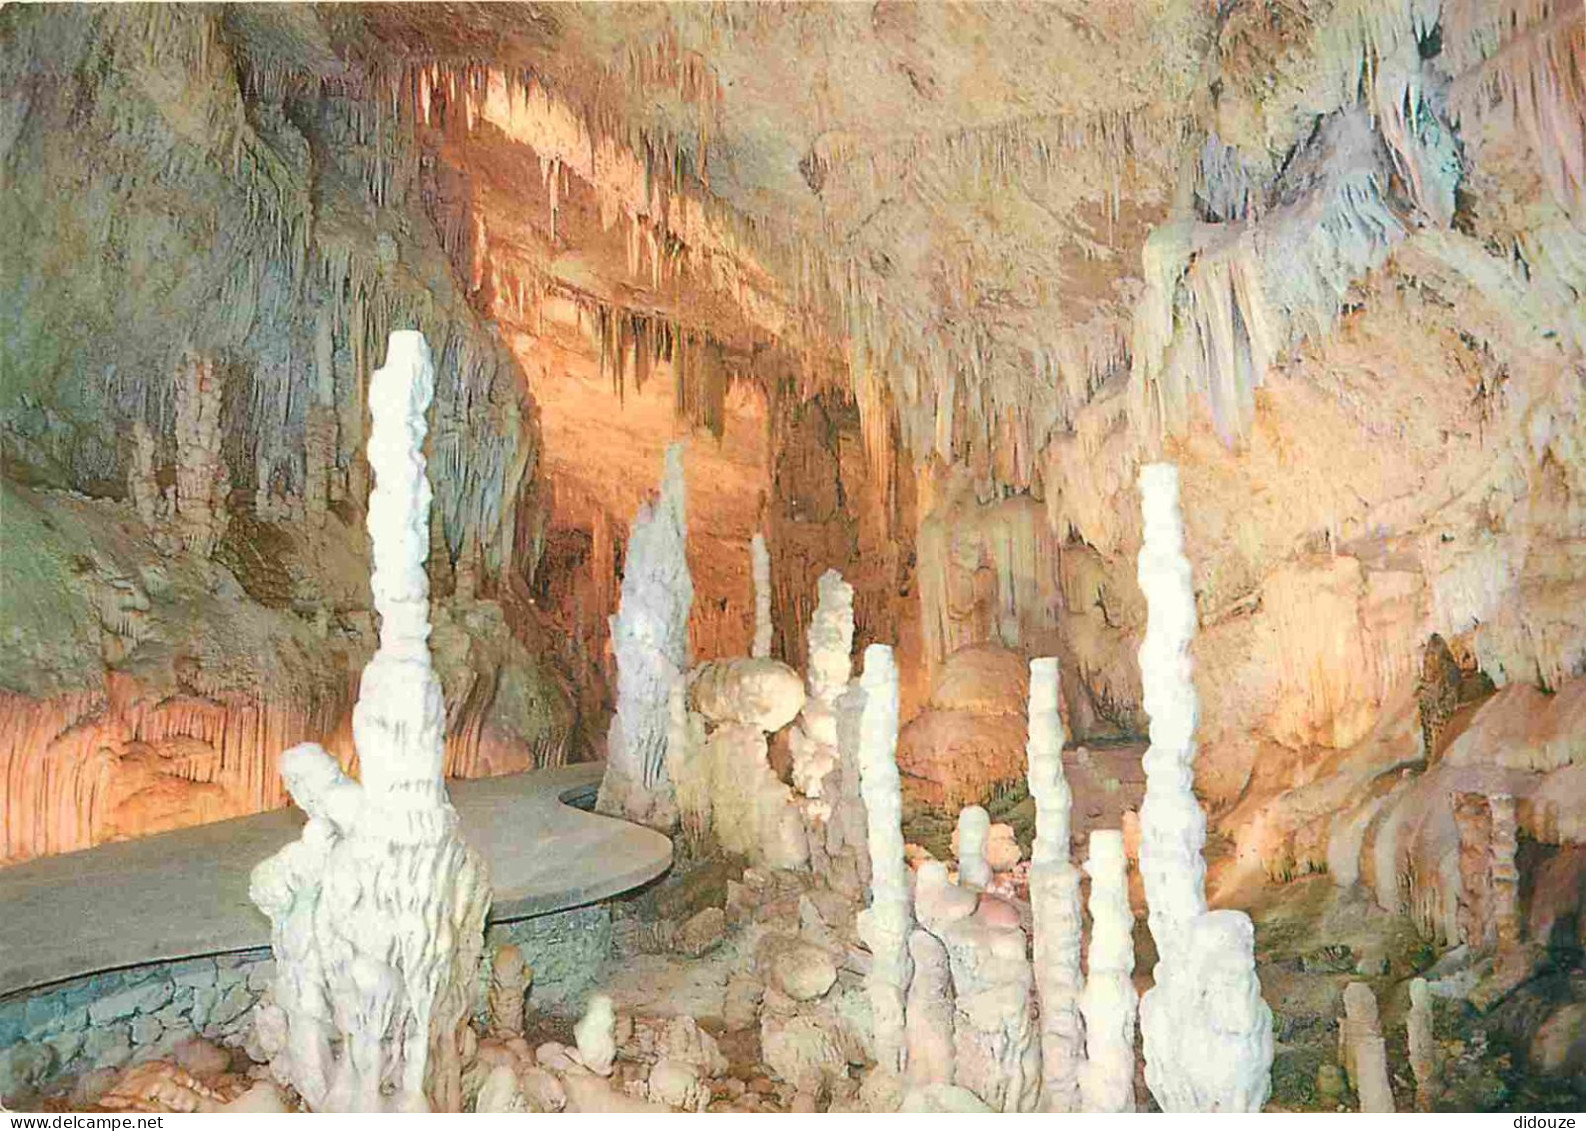 Liban - Grotte De Jiita - Jilta Grotto Upper Gallery - Petrified Forest - Spéléologie - Lebanon - CPM - Voir Scans Recto - Libanon